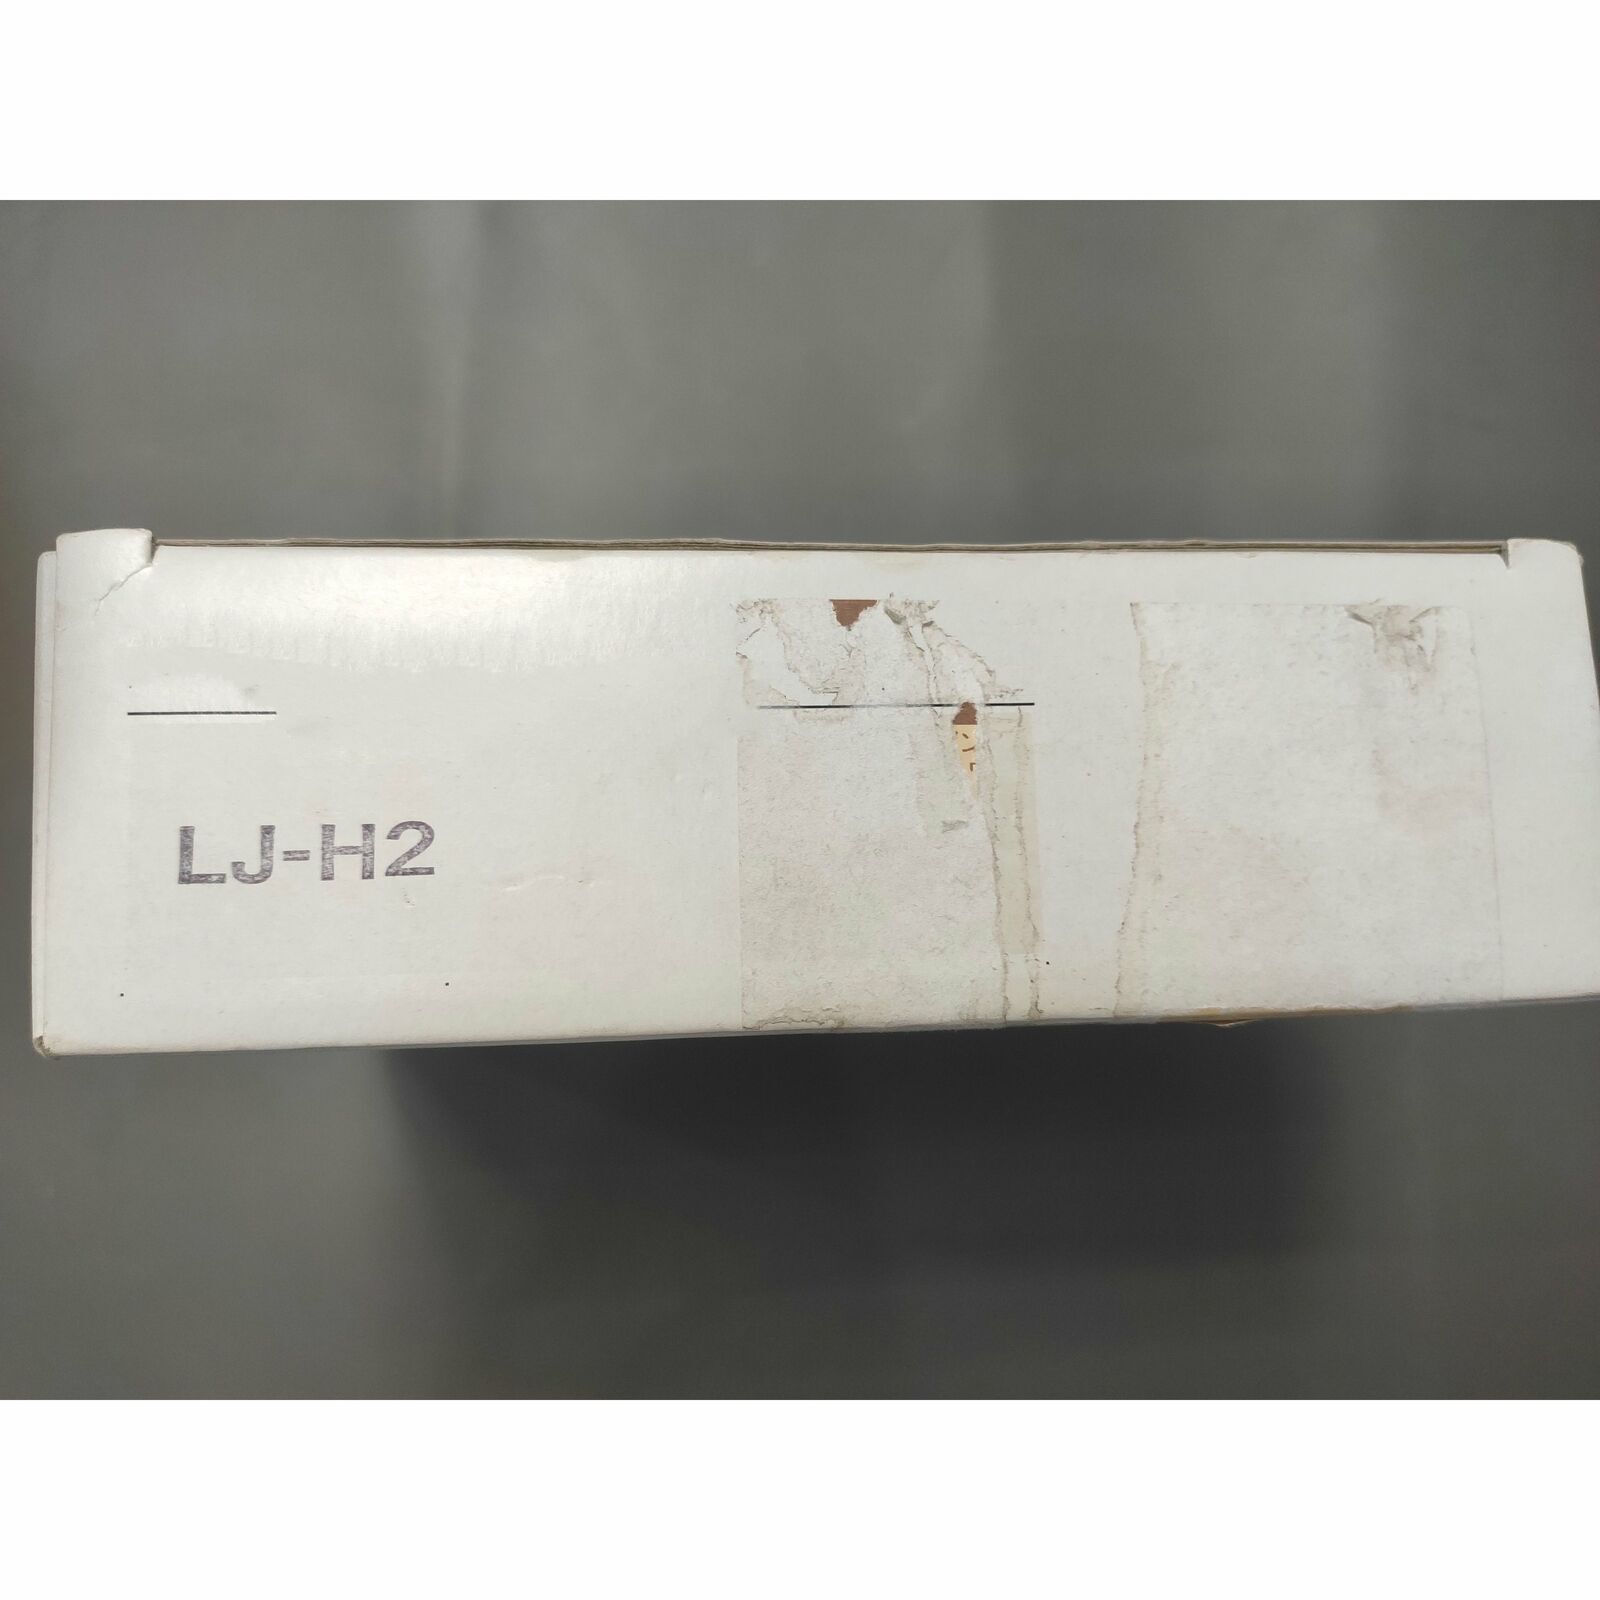 ONE NEW LJ-H2 in Box LJH2 ONE Year Warranty #E1